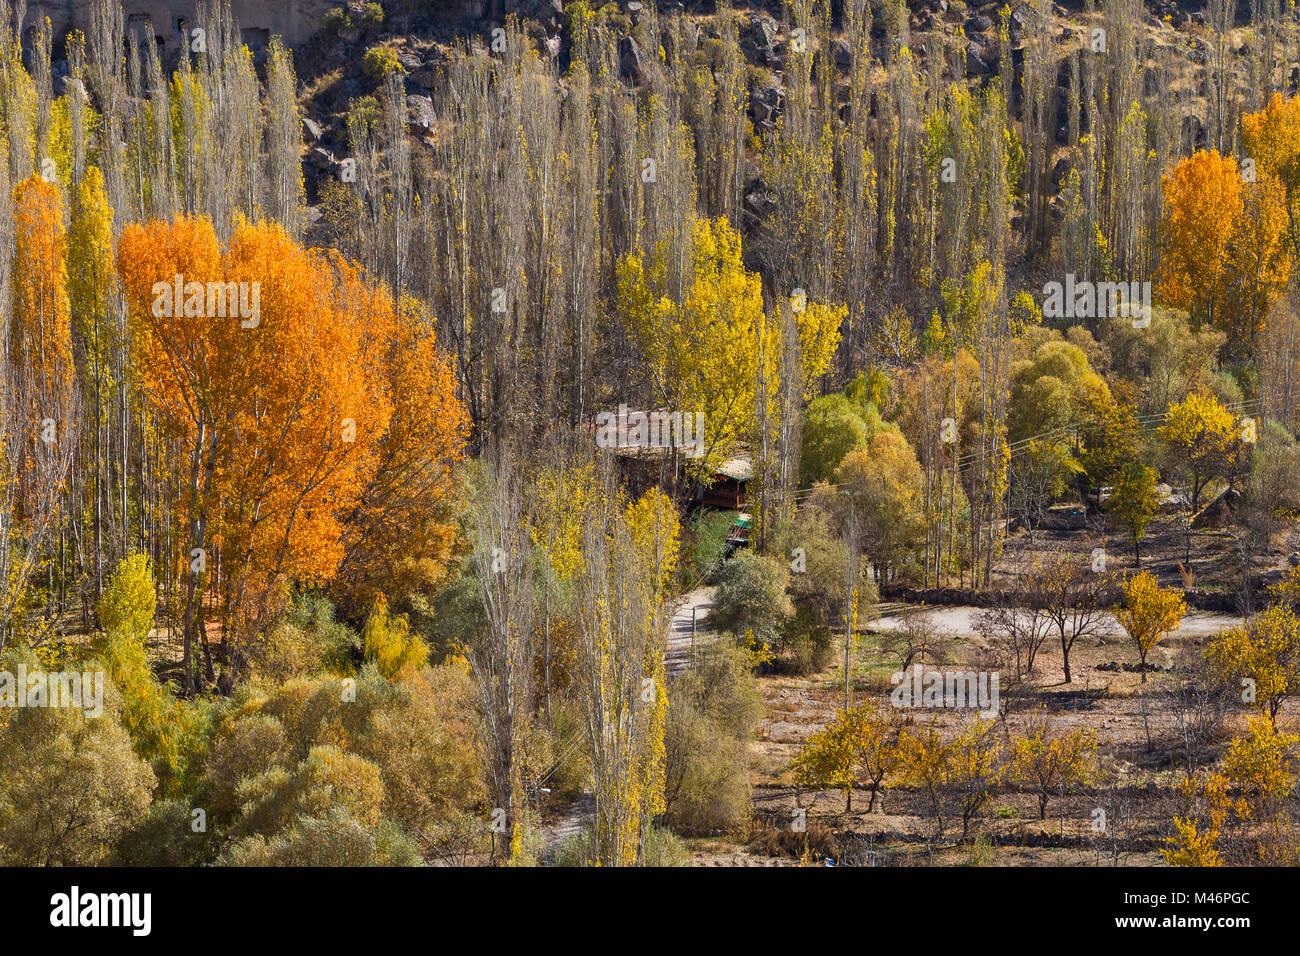 Fall colors in the Ihlara Valley, Cappadocia, Turkey Stock Photo